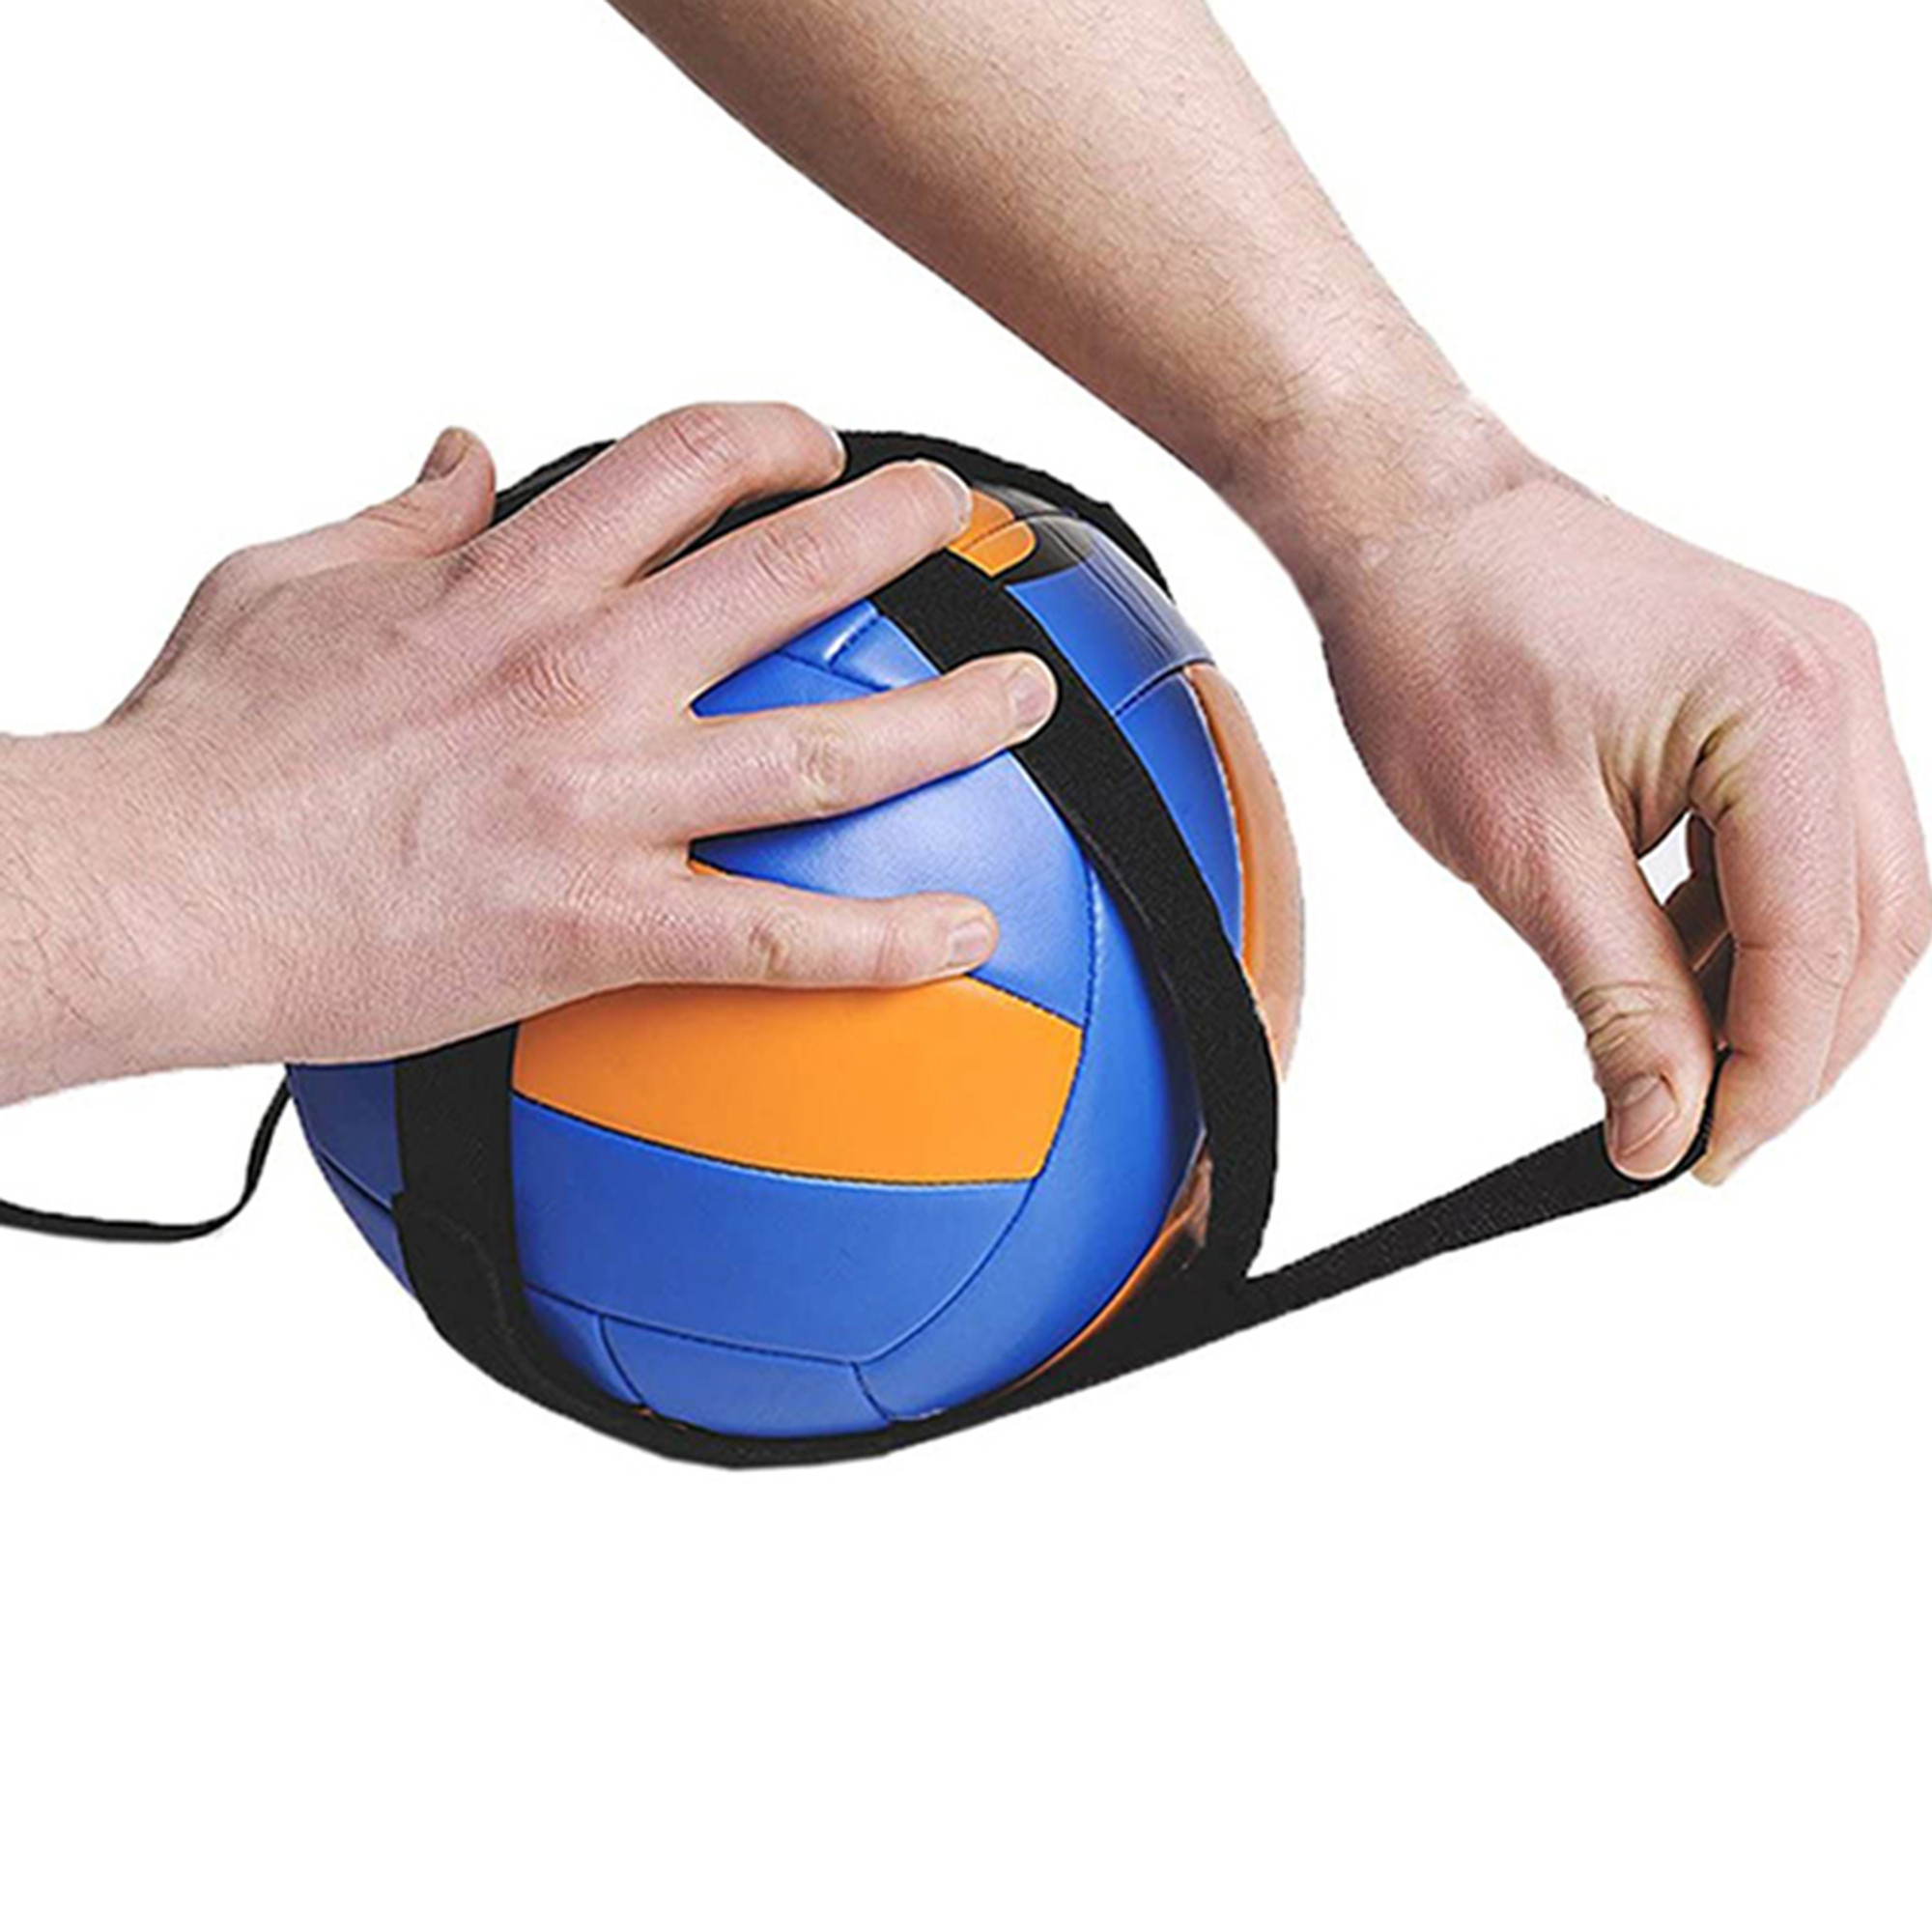 Volleyball Training with Adjustable Waist Belt & 85